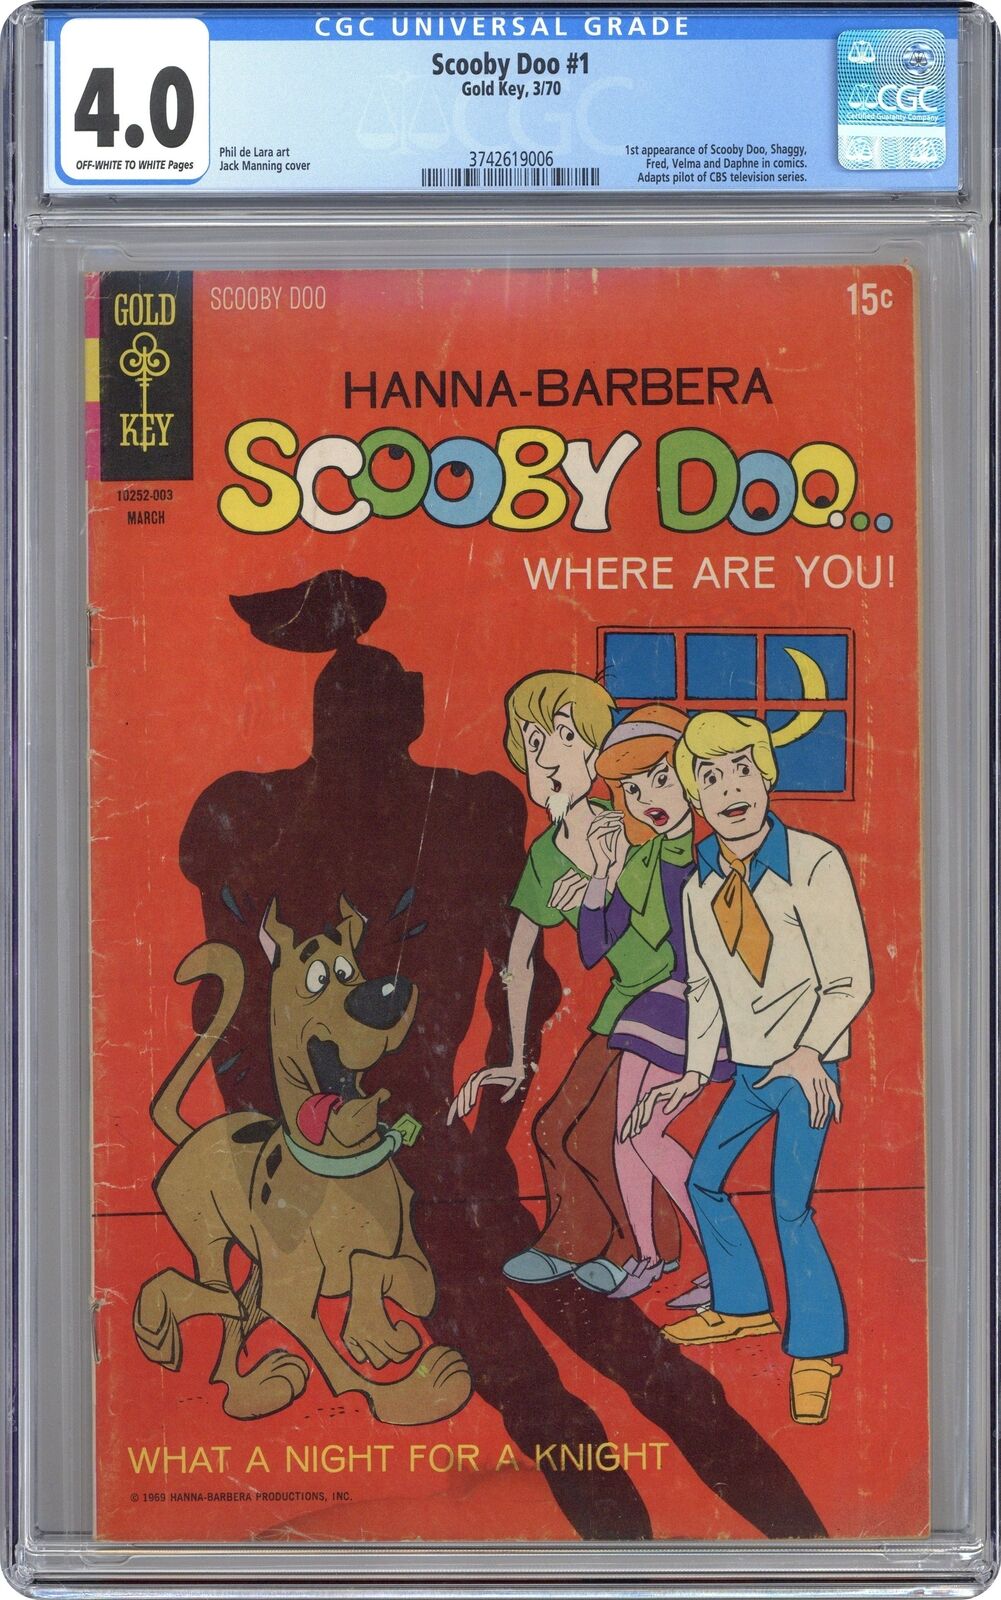 Scooby Doo #1 CGC 4.0 1970 Gold Key 3742619006